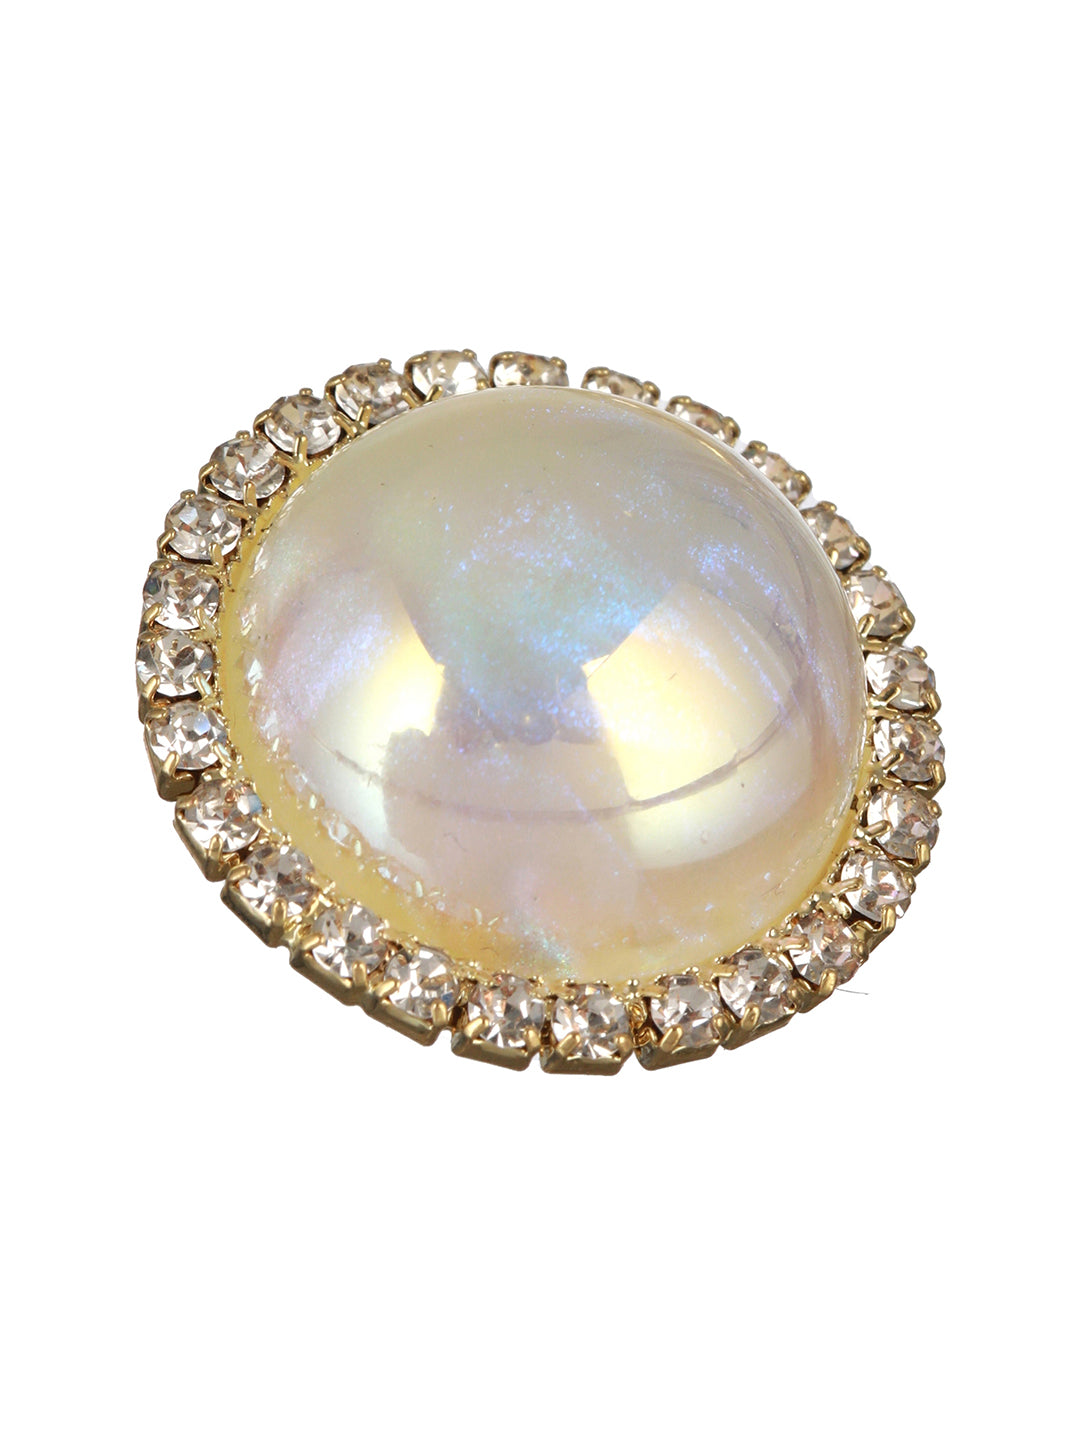 White Pearl American Diamond Gold-Plated Stud Earrings